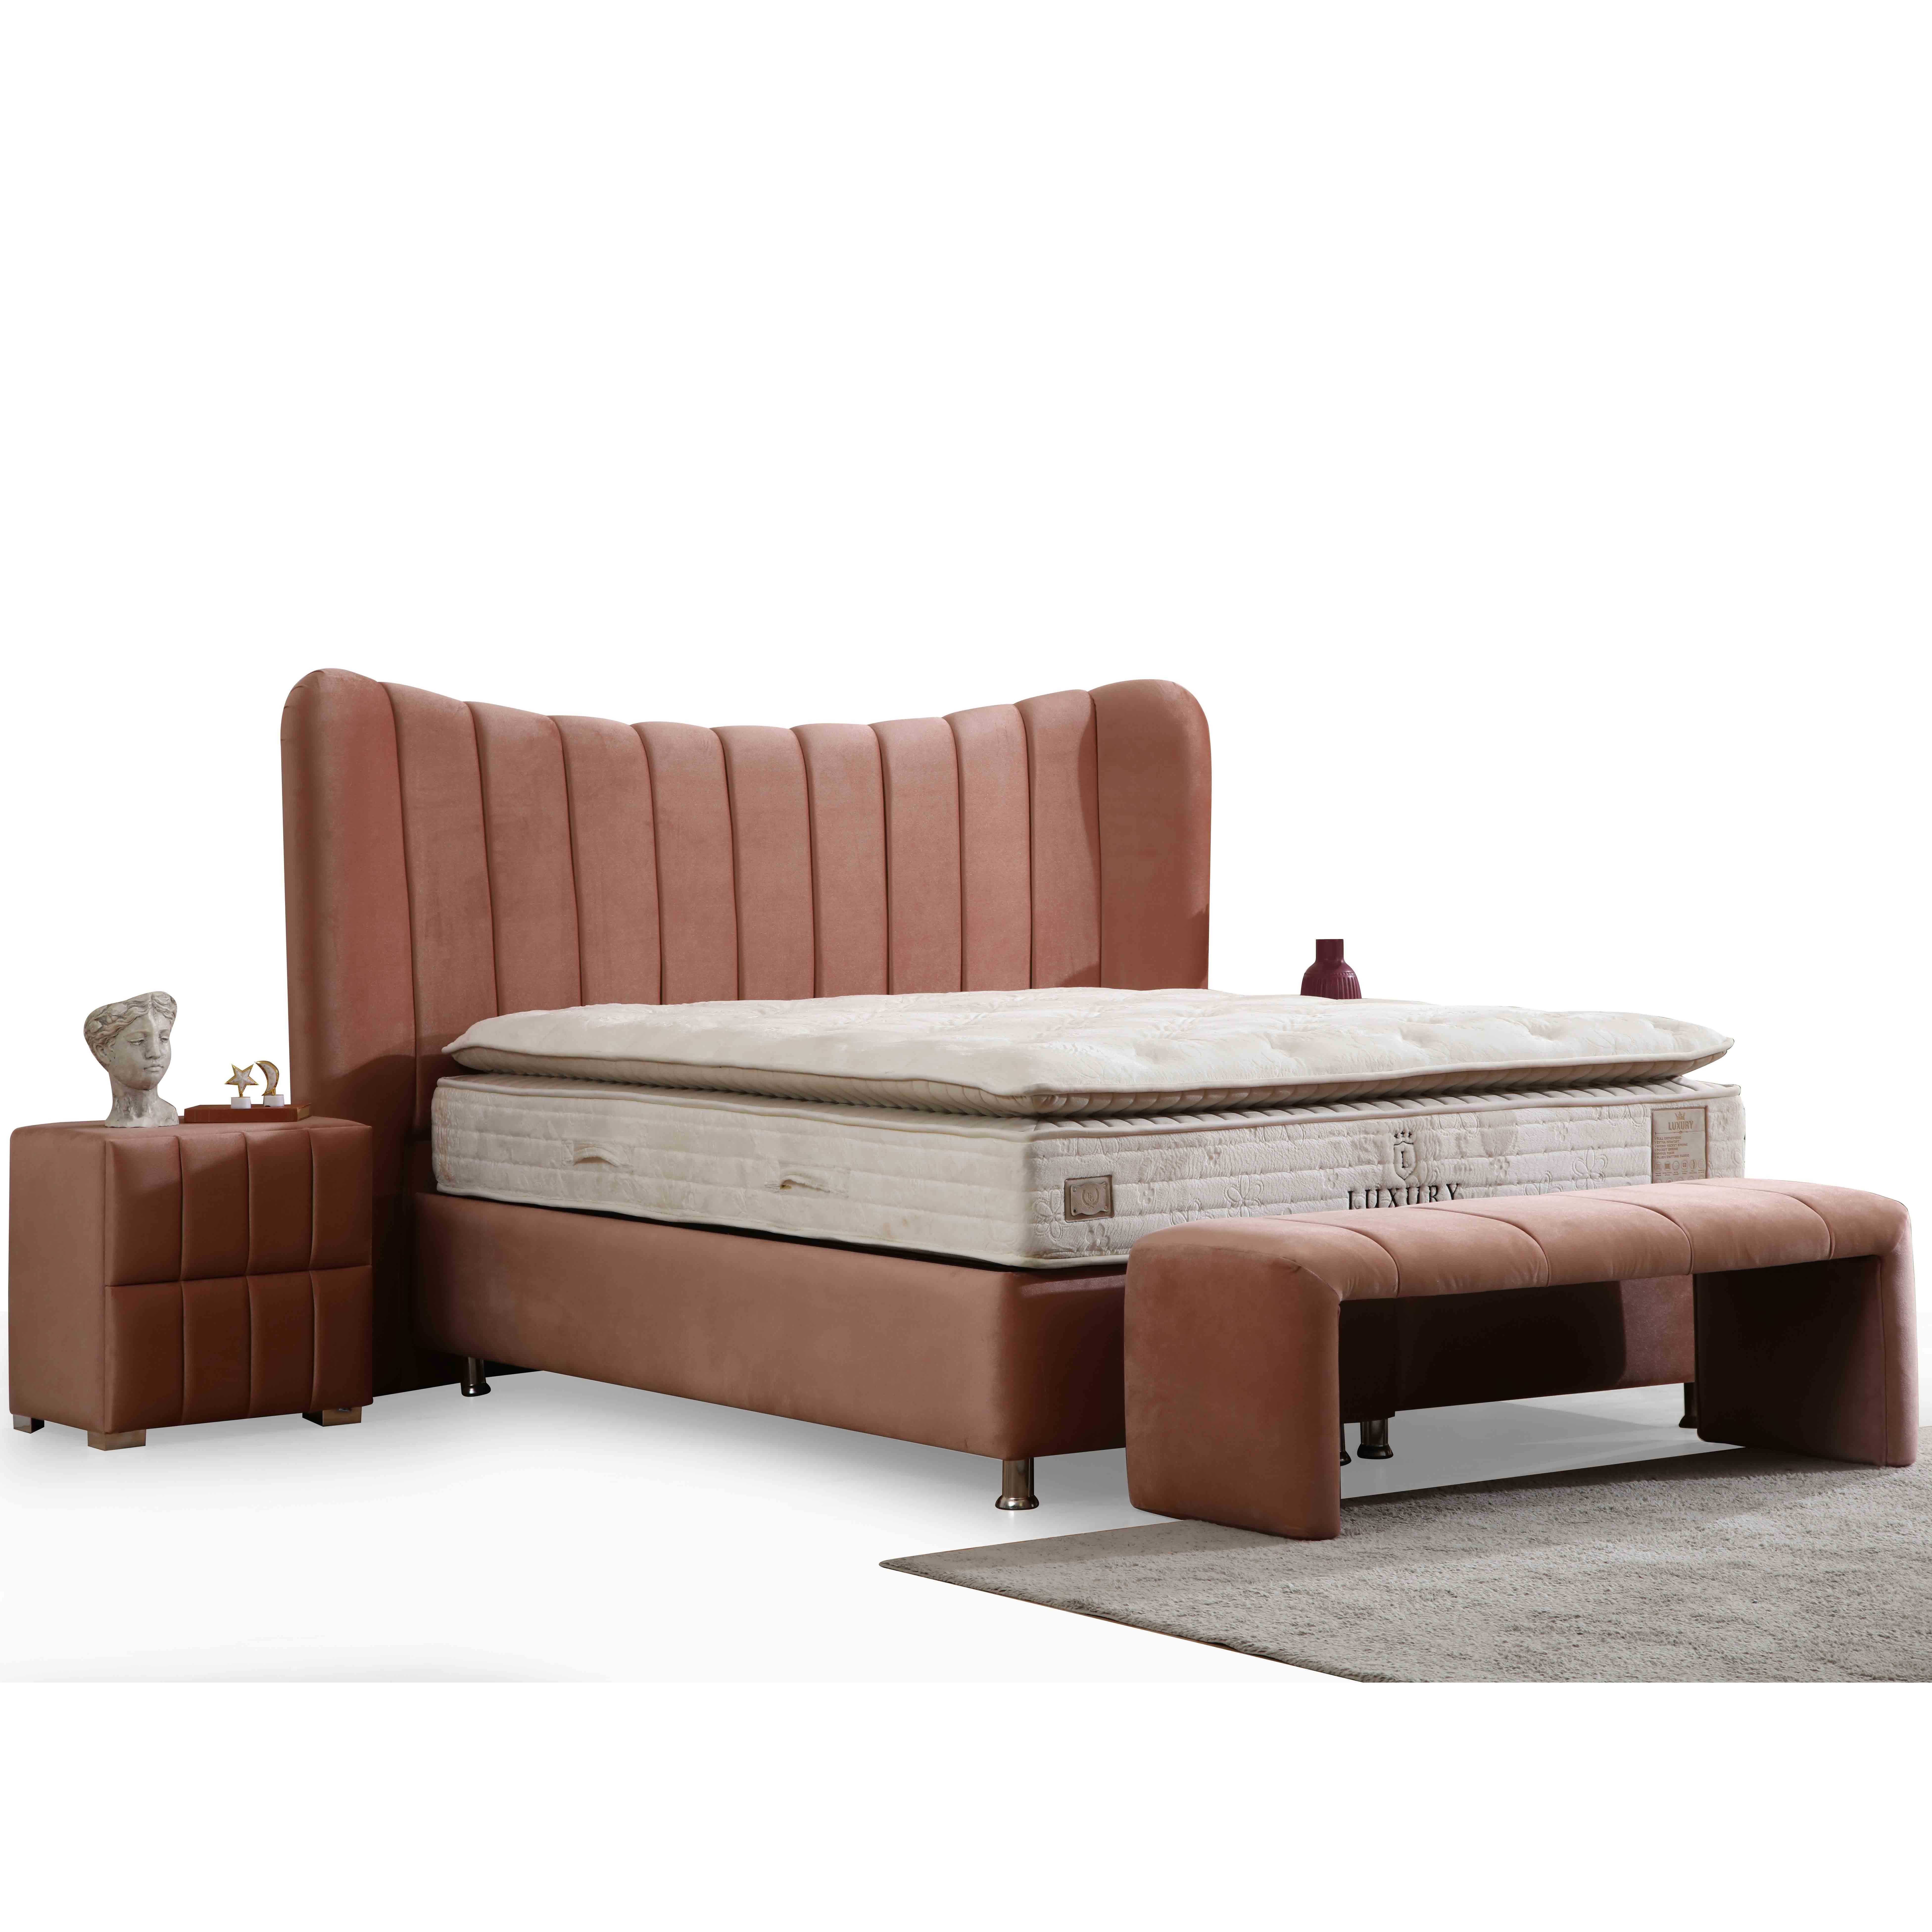 Rodos Bed With Storage 180x200 cm